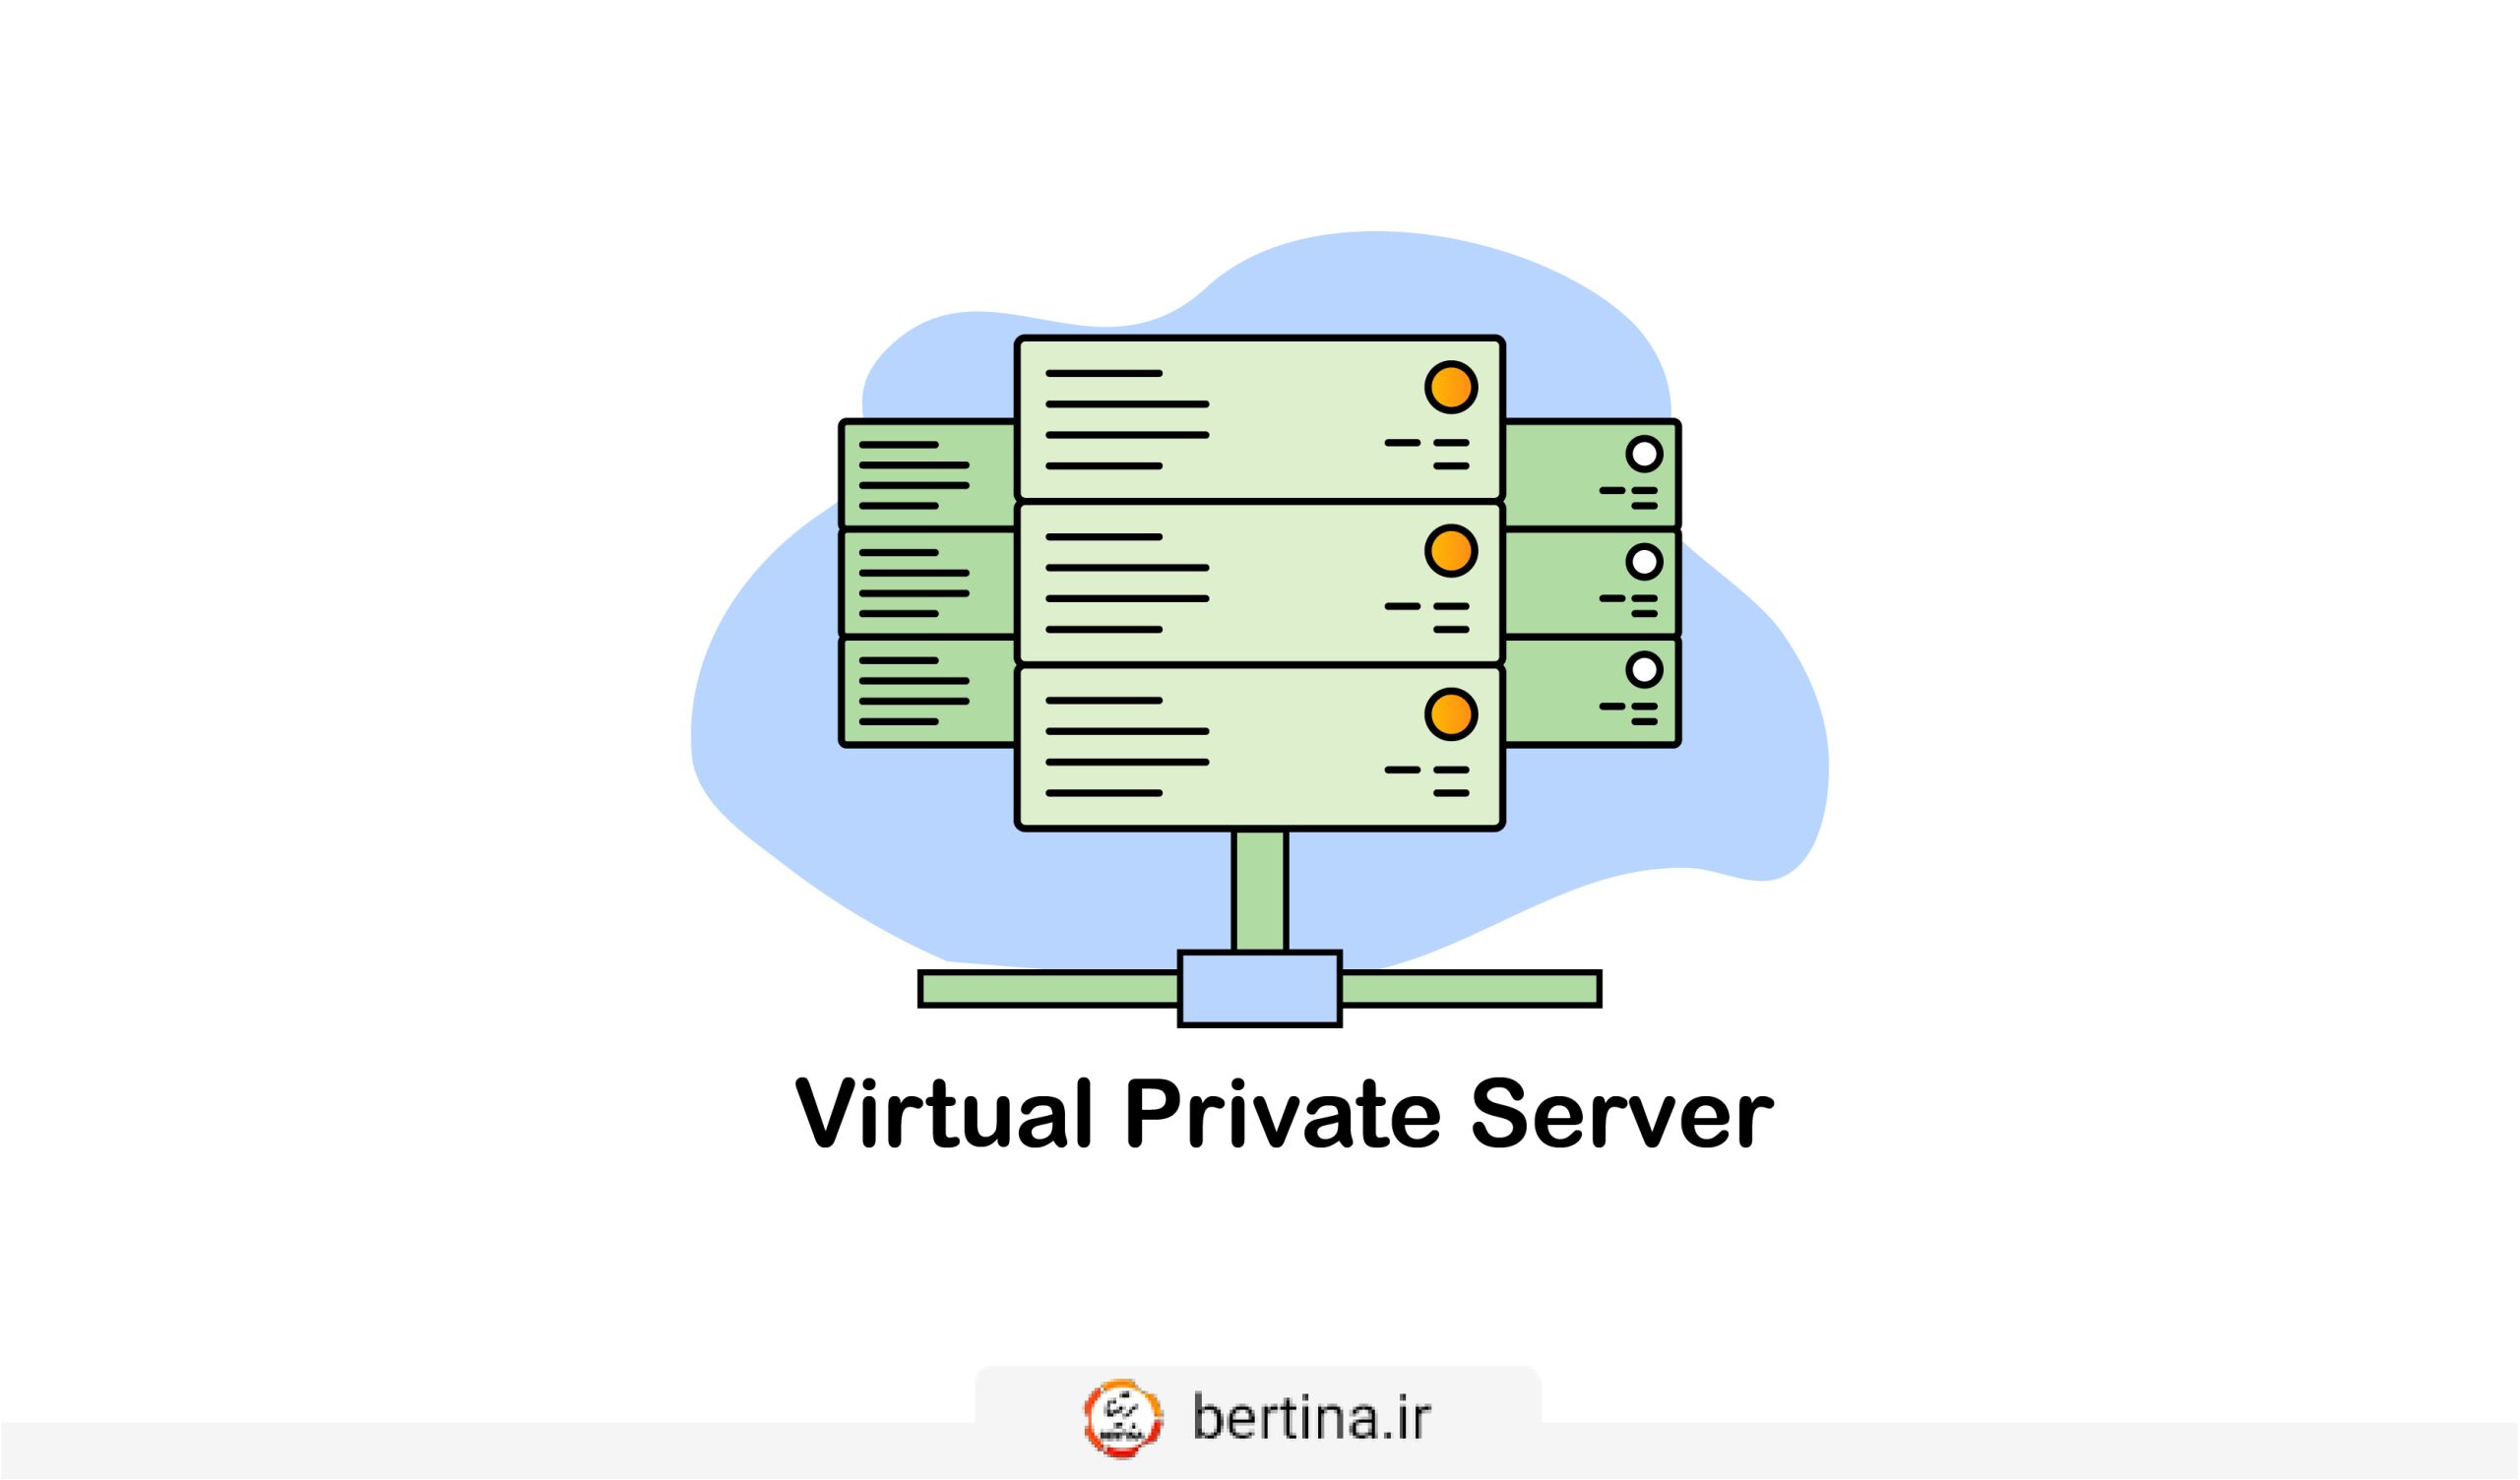 VPS مخفف virtual private server و به معنی سرور اختصاصی مجازی است.